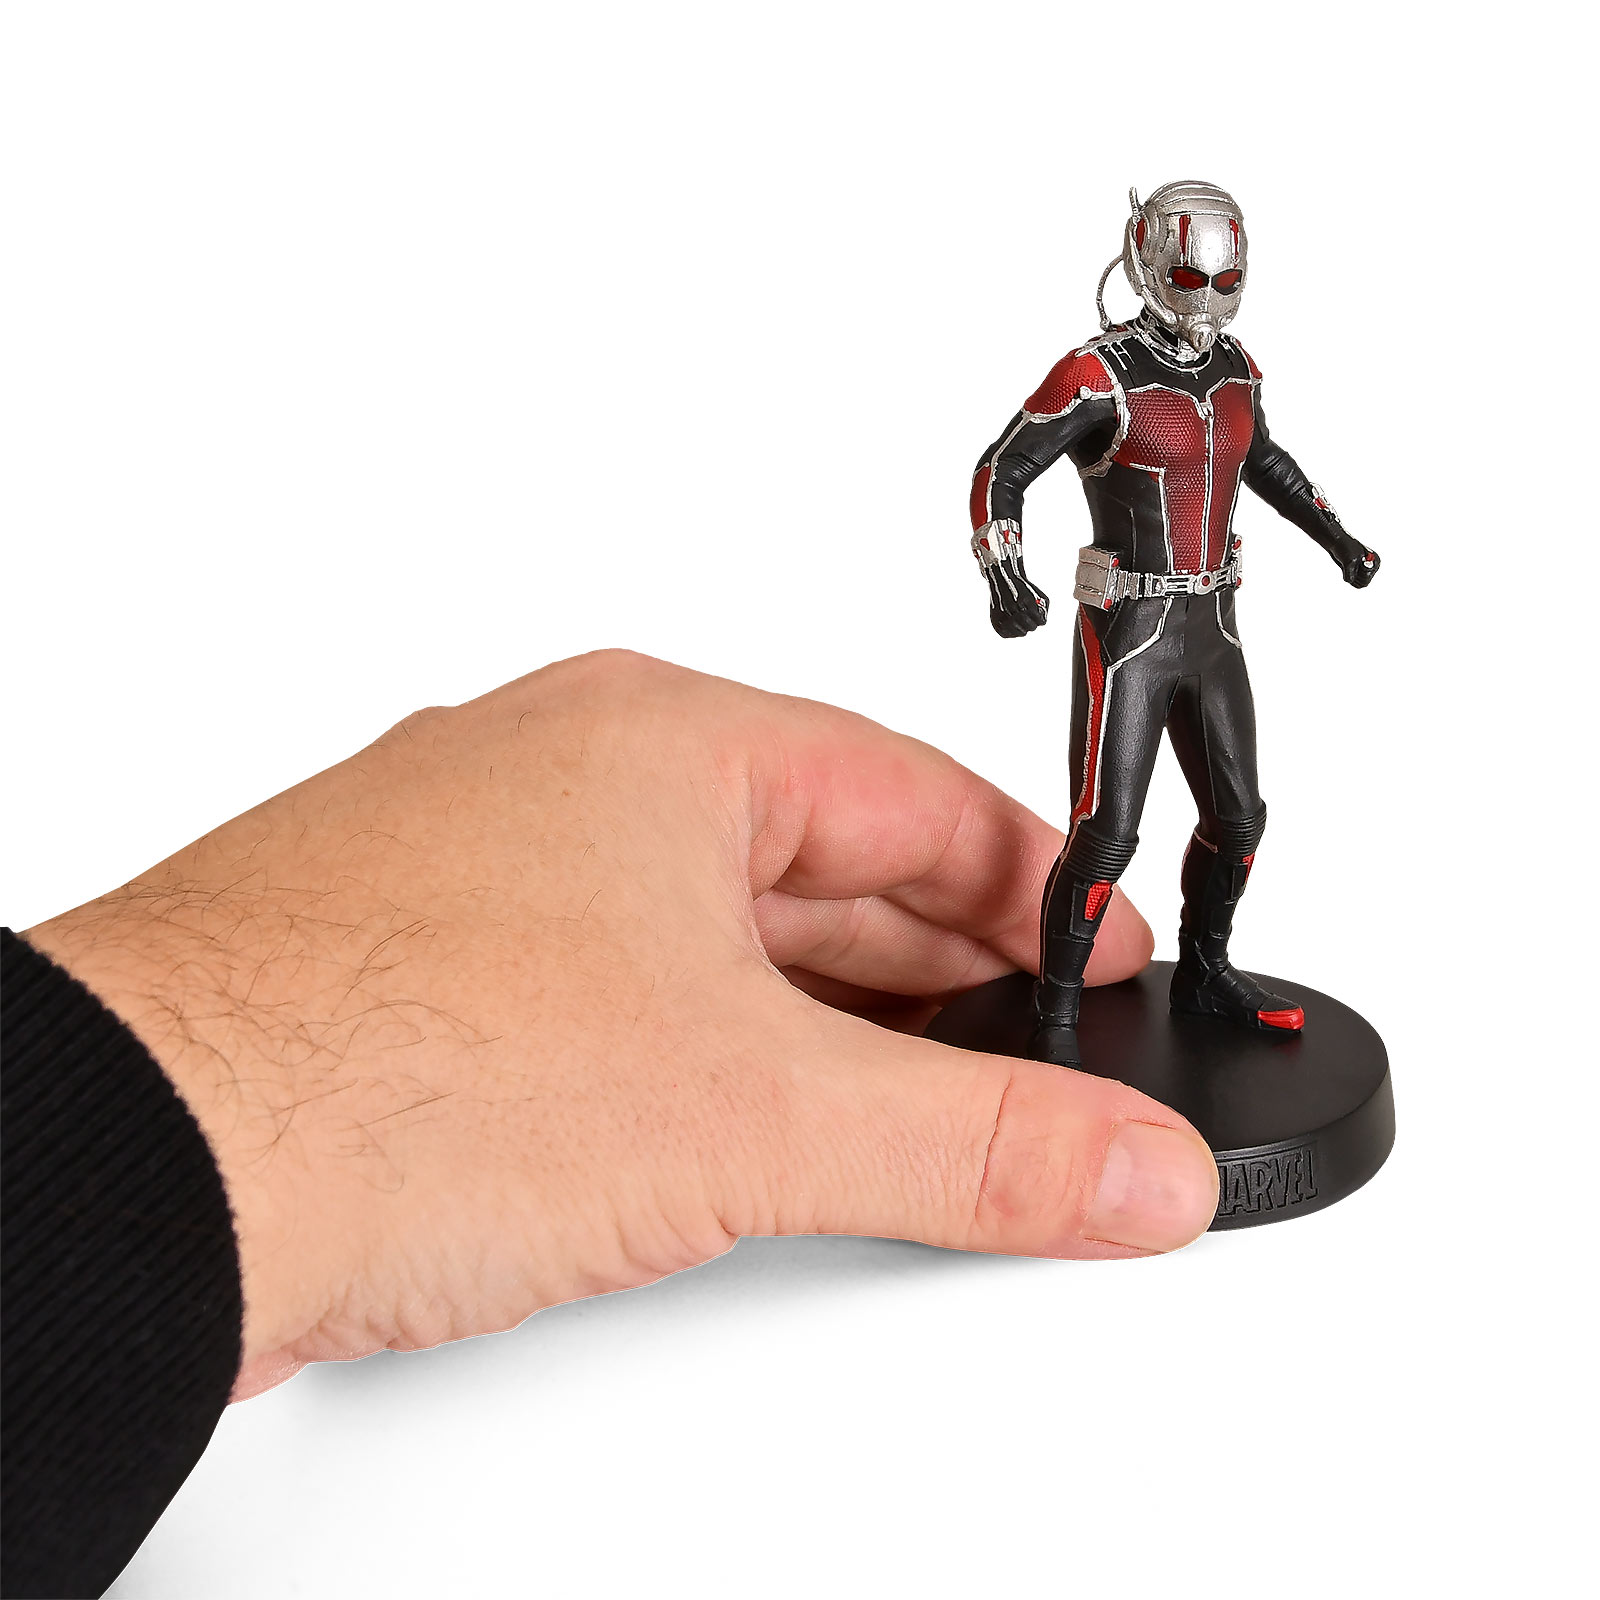 Ant-Man Hero Collector Figure 12 cm